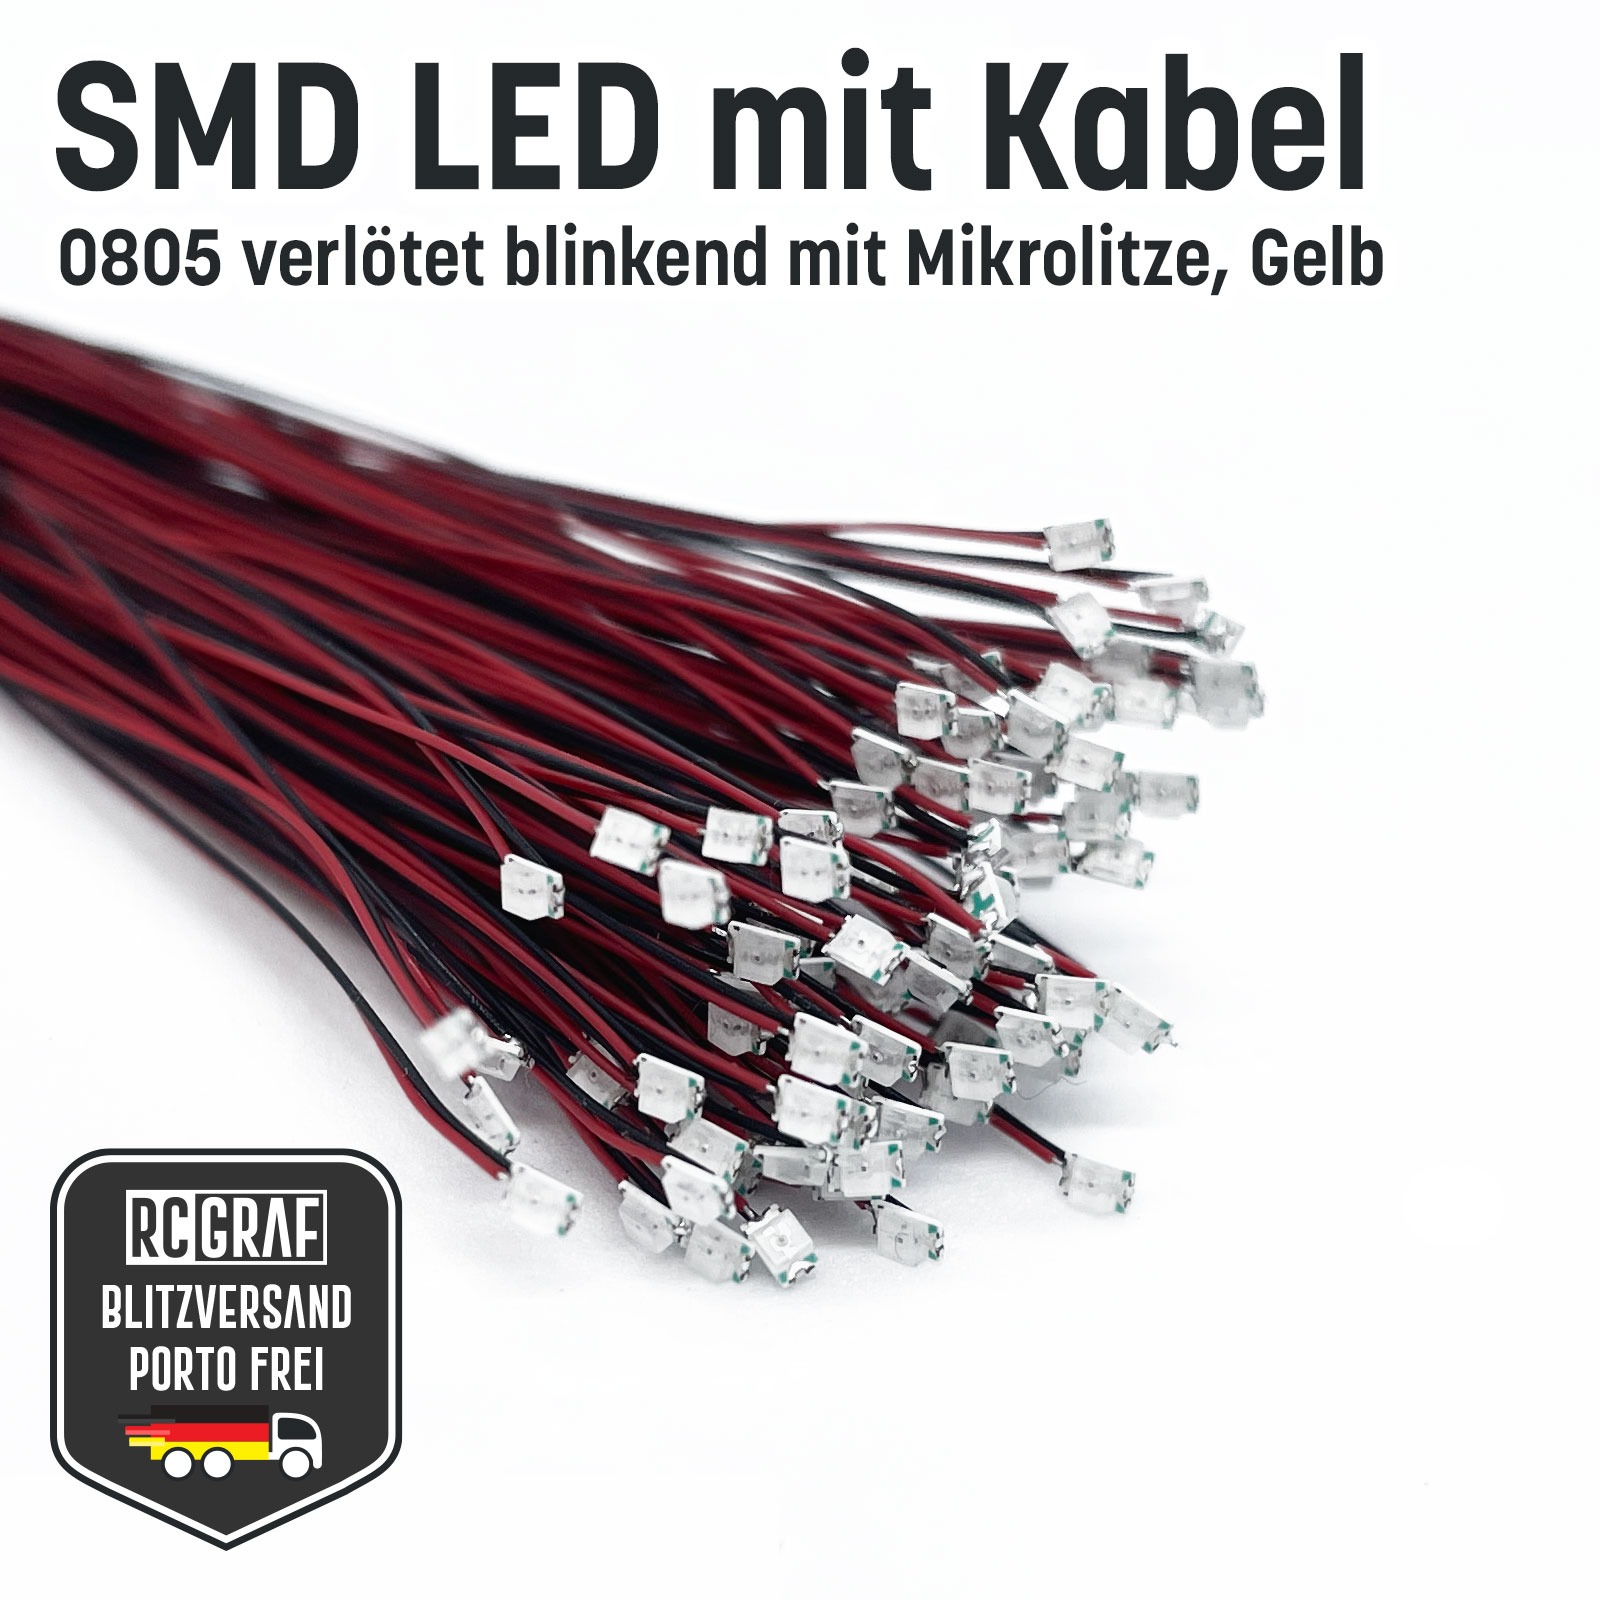 Flashing SMD LED 0805 Microlitz 30cm soldered 6